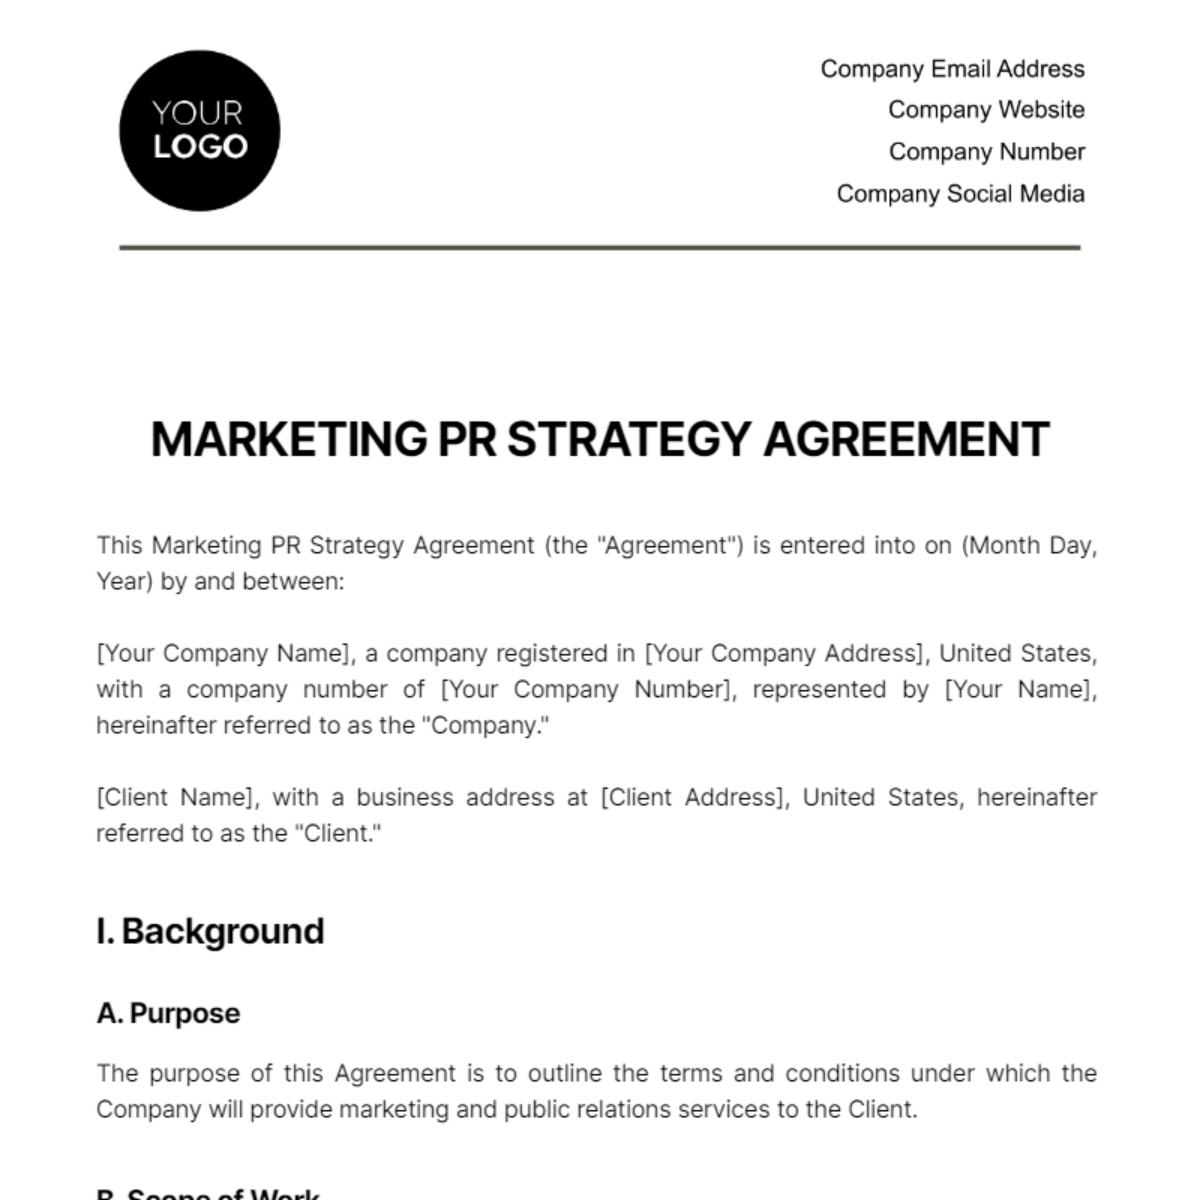 Marketing PR Strategy Agreement Template